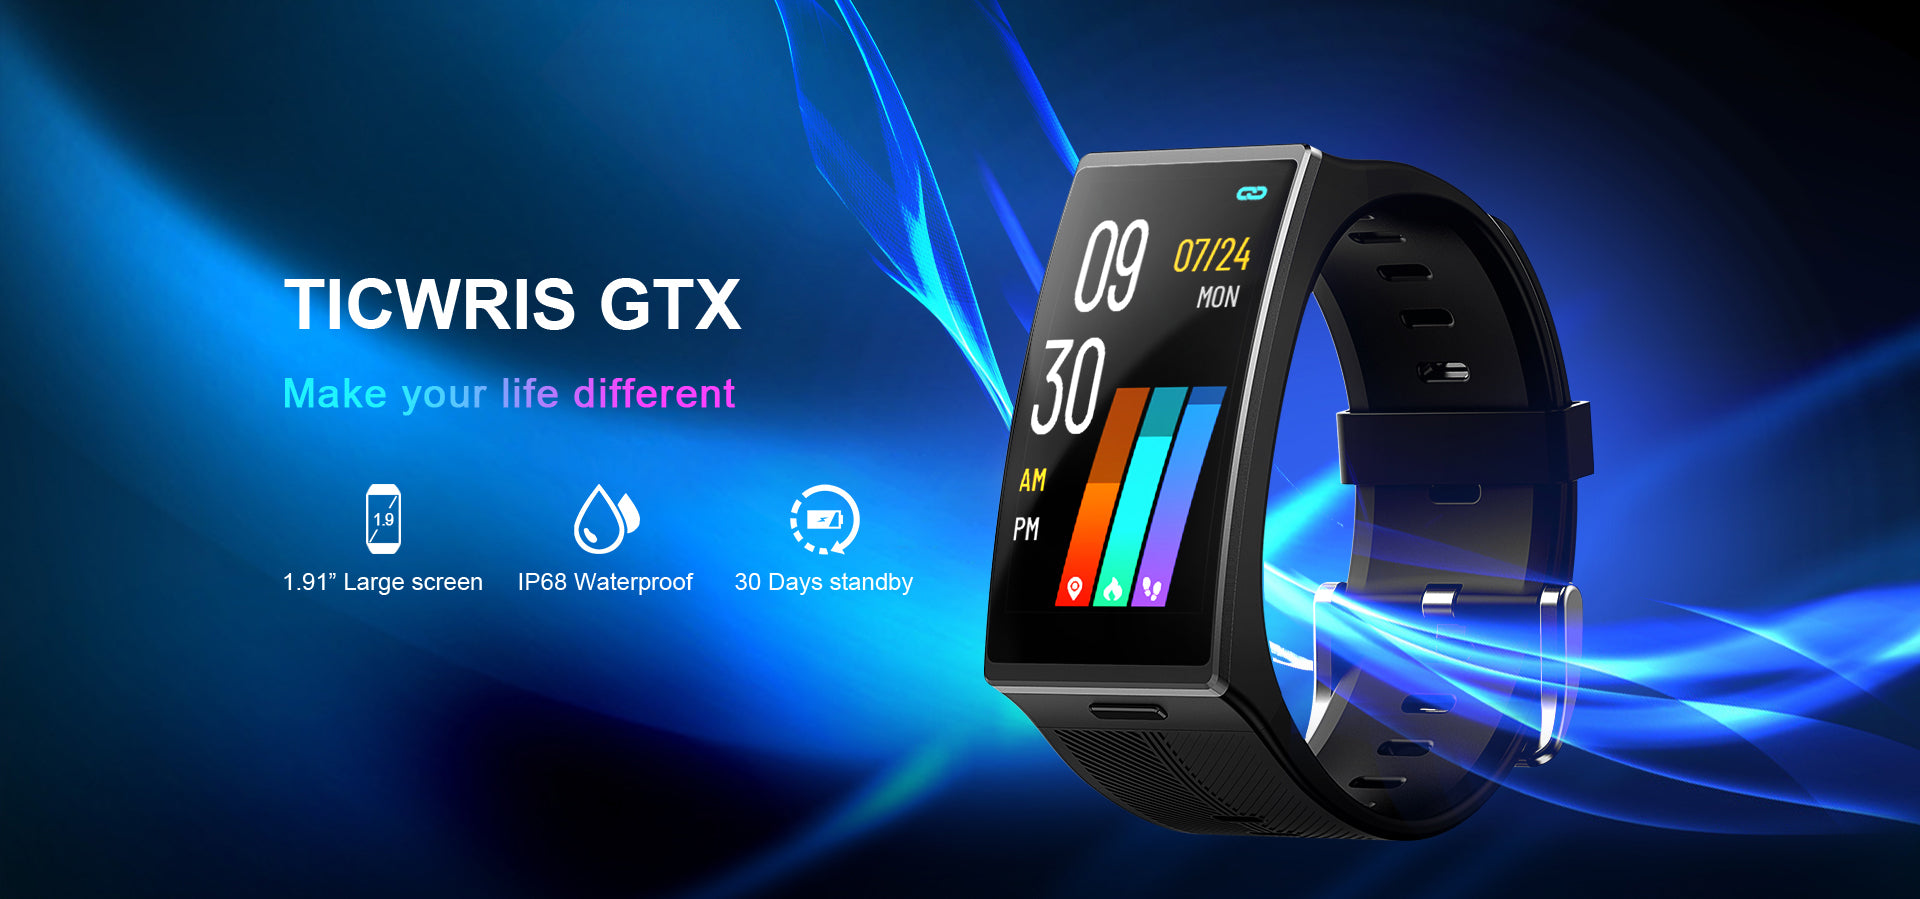 TICWRIS GTX Smartwatch Make your life different